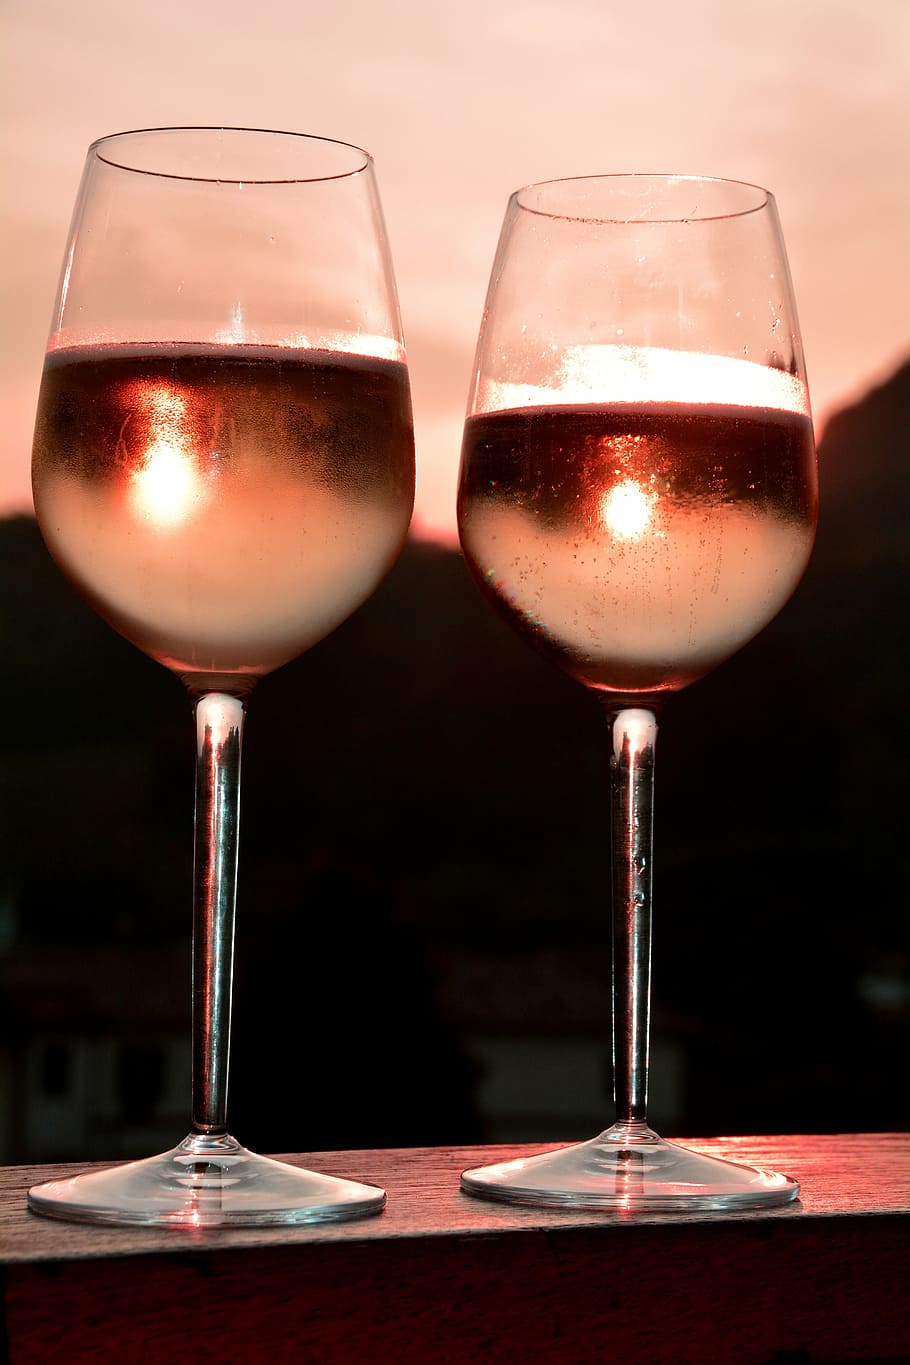 fotografi selektif, fokus, 2 gelas anggur batang panjang, cairan, emas, jam, sorakan, salut, gelas anggur, anggur